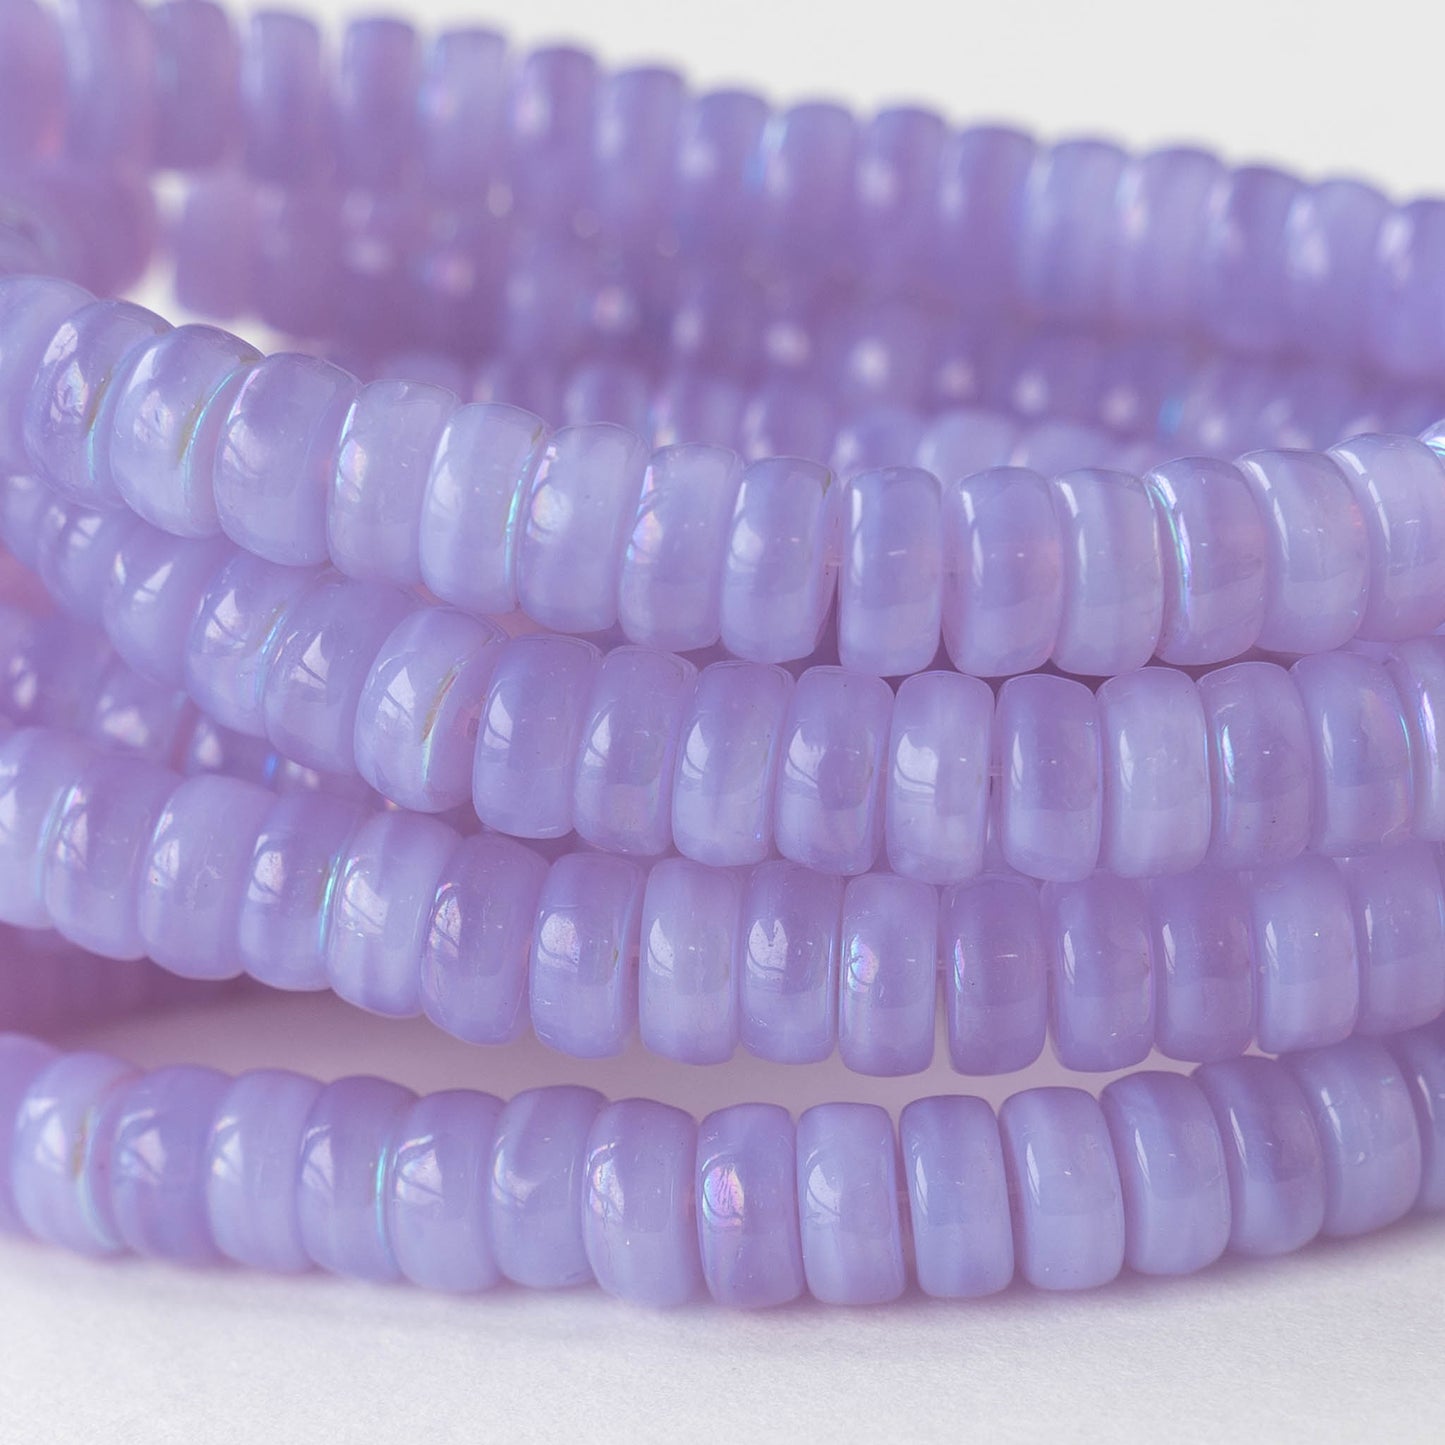 6mm Glass Heishi Beads - Lavender AB - 25 Beads